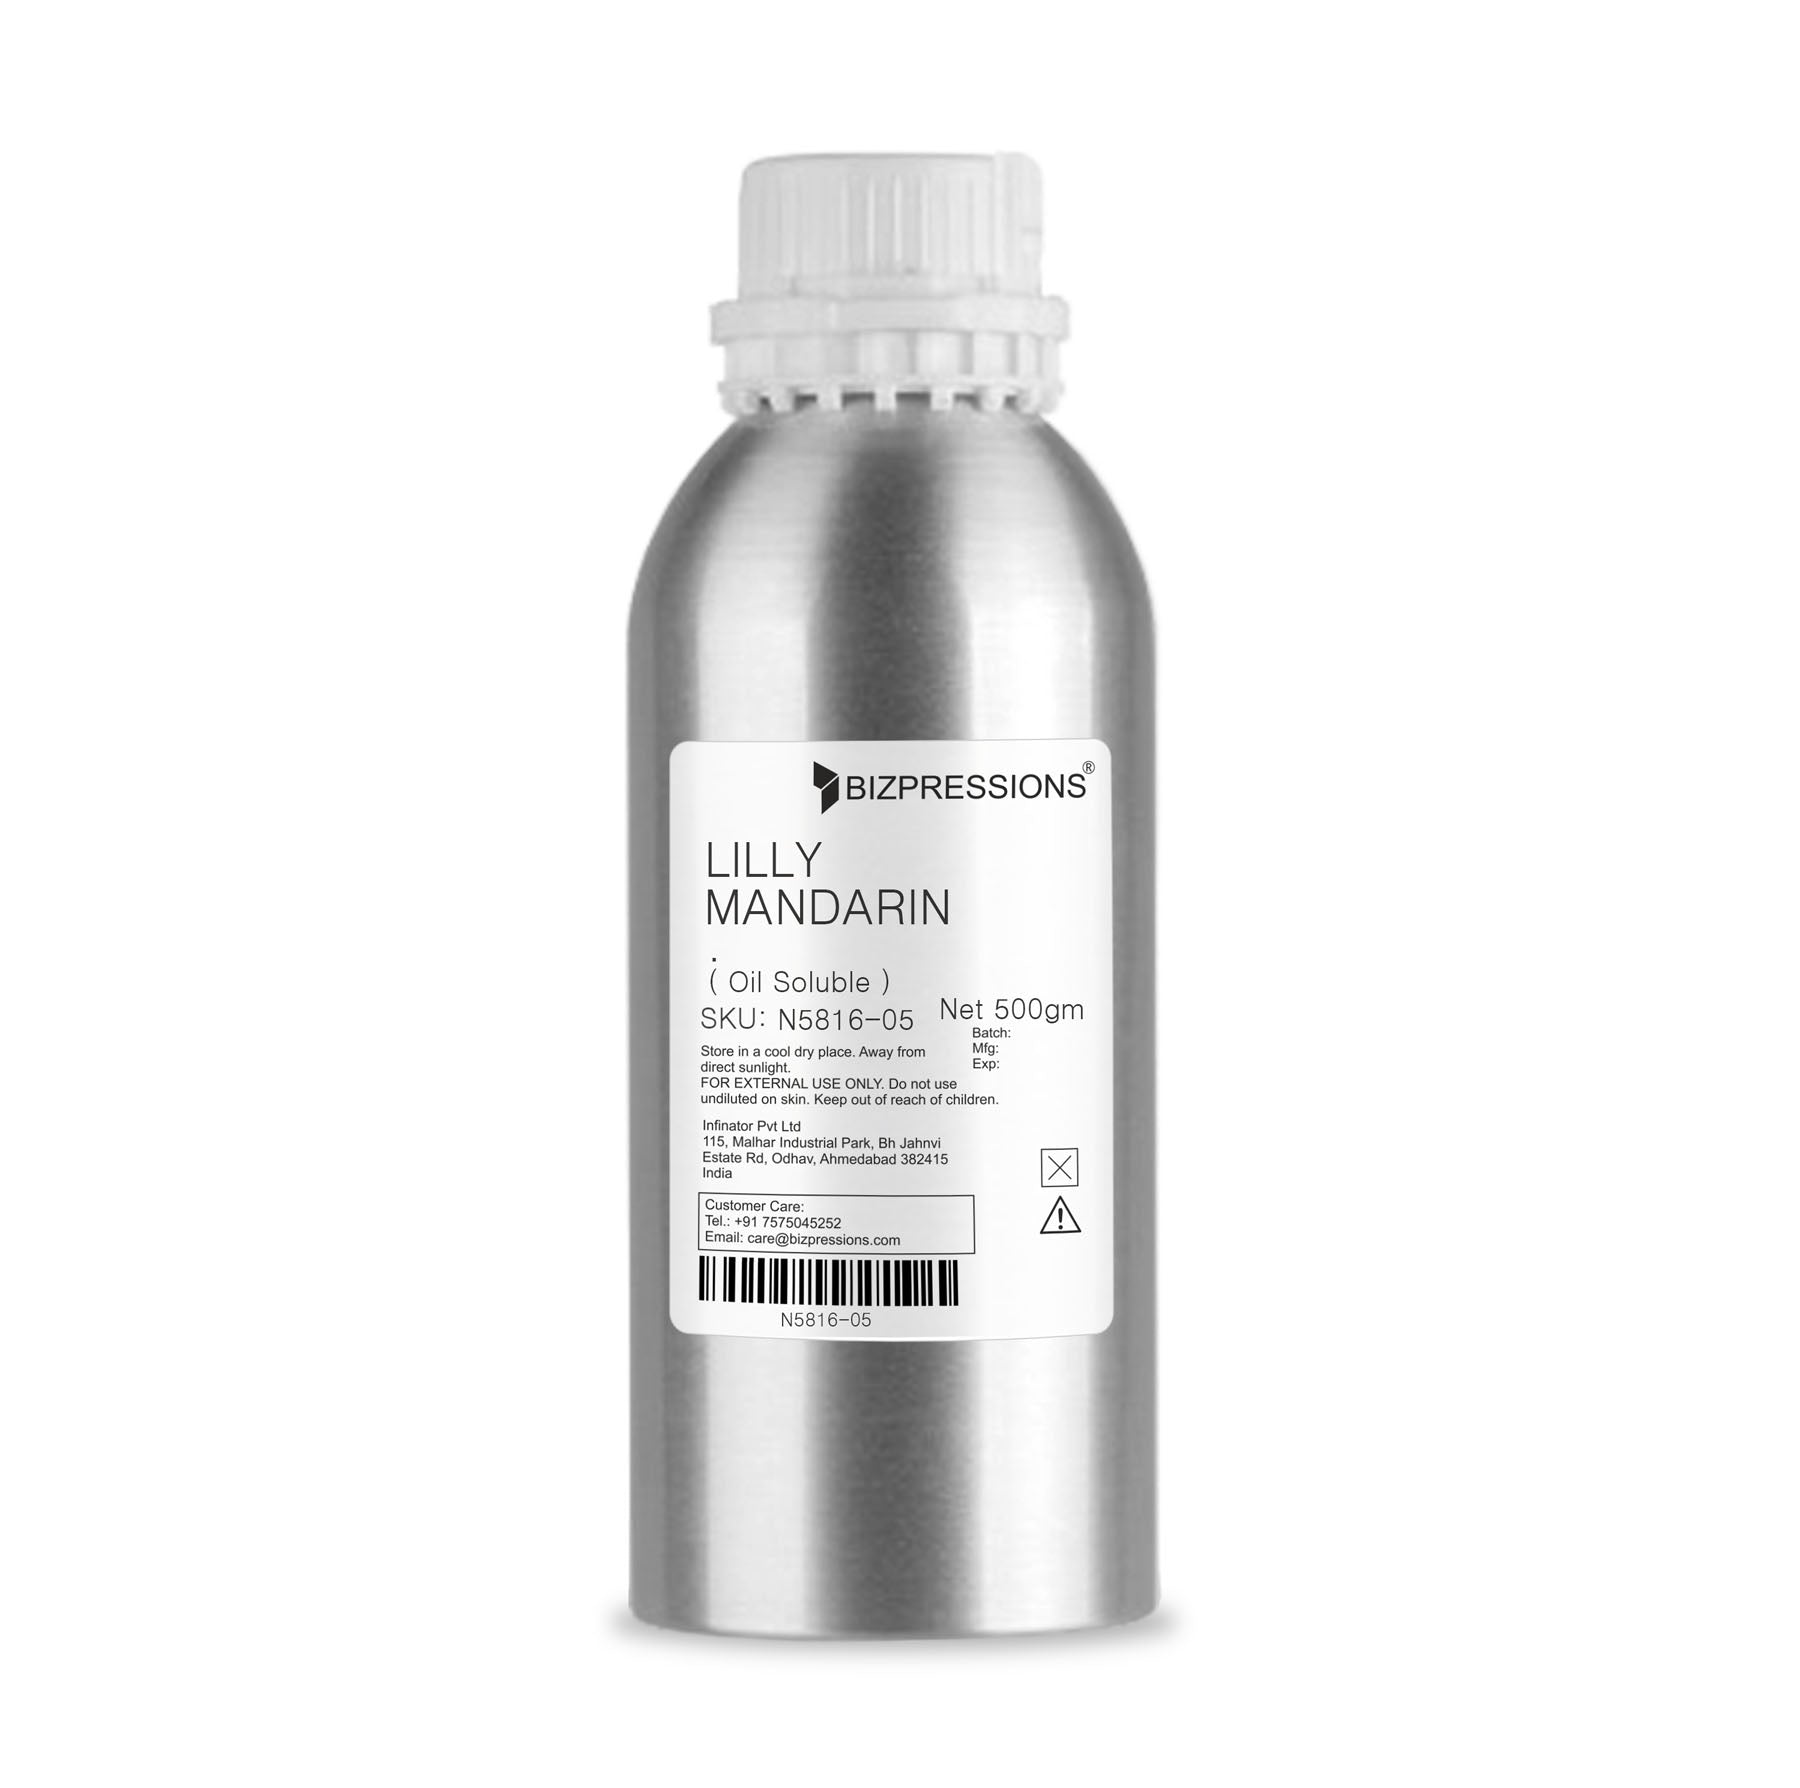 LILLY MANDARIN - Fragrance ( Oil Soluble ) - 500 gm